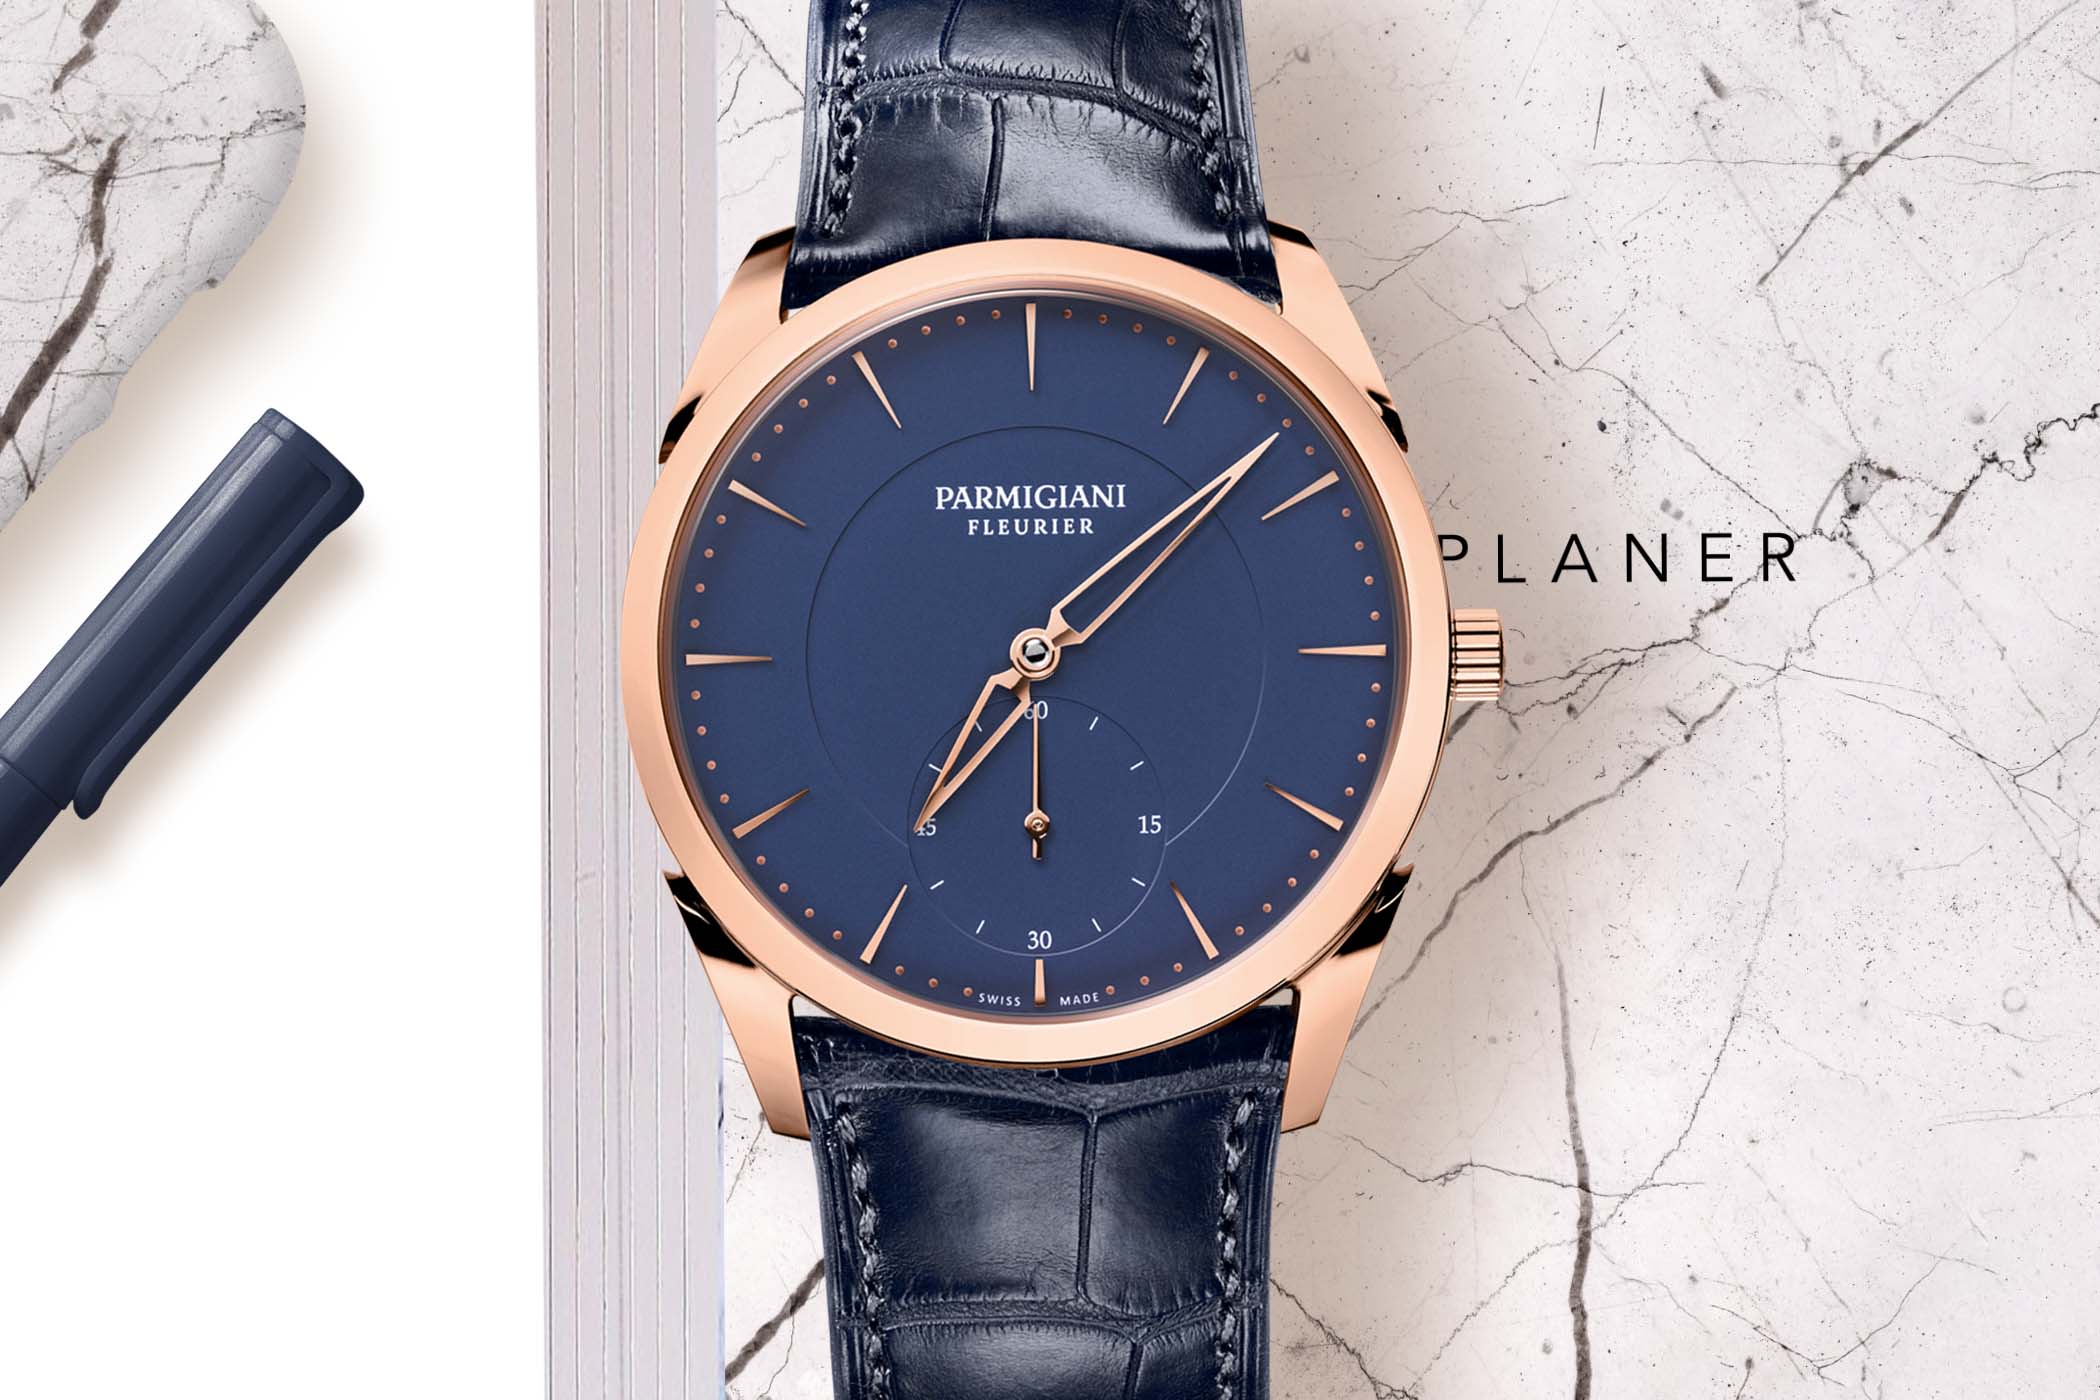 2019 Redesigned Parmigiani Fleurier Tonda 1950 Ultra-Thin Dress Watch